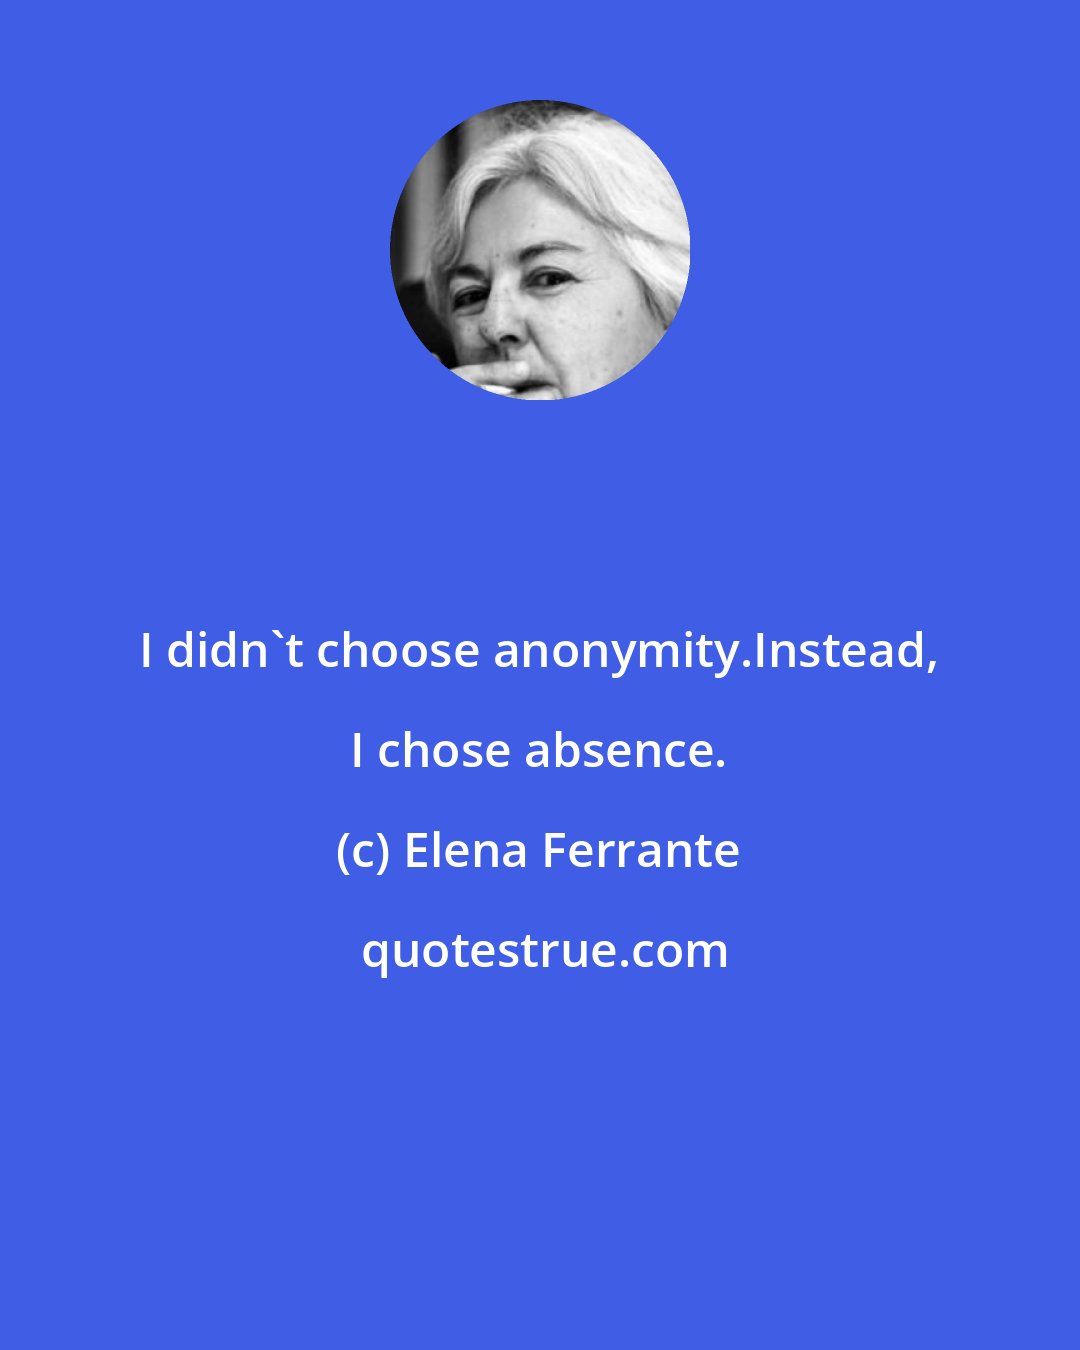 Elena Ferrante: I didn't choose anonymity.Instead, I chose absence.